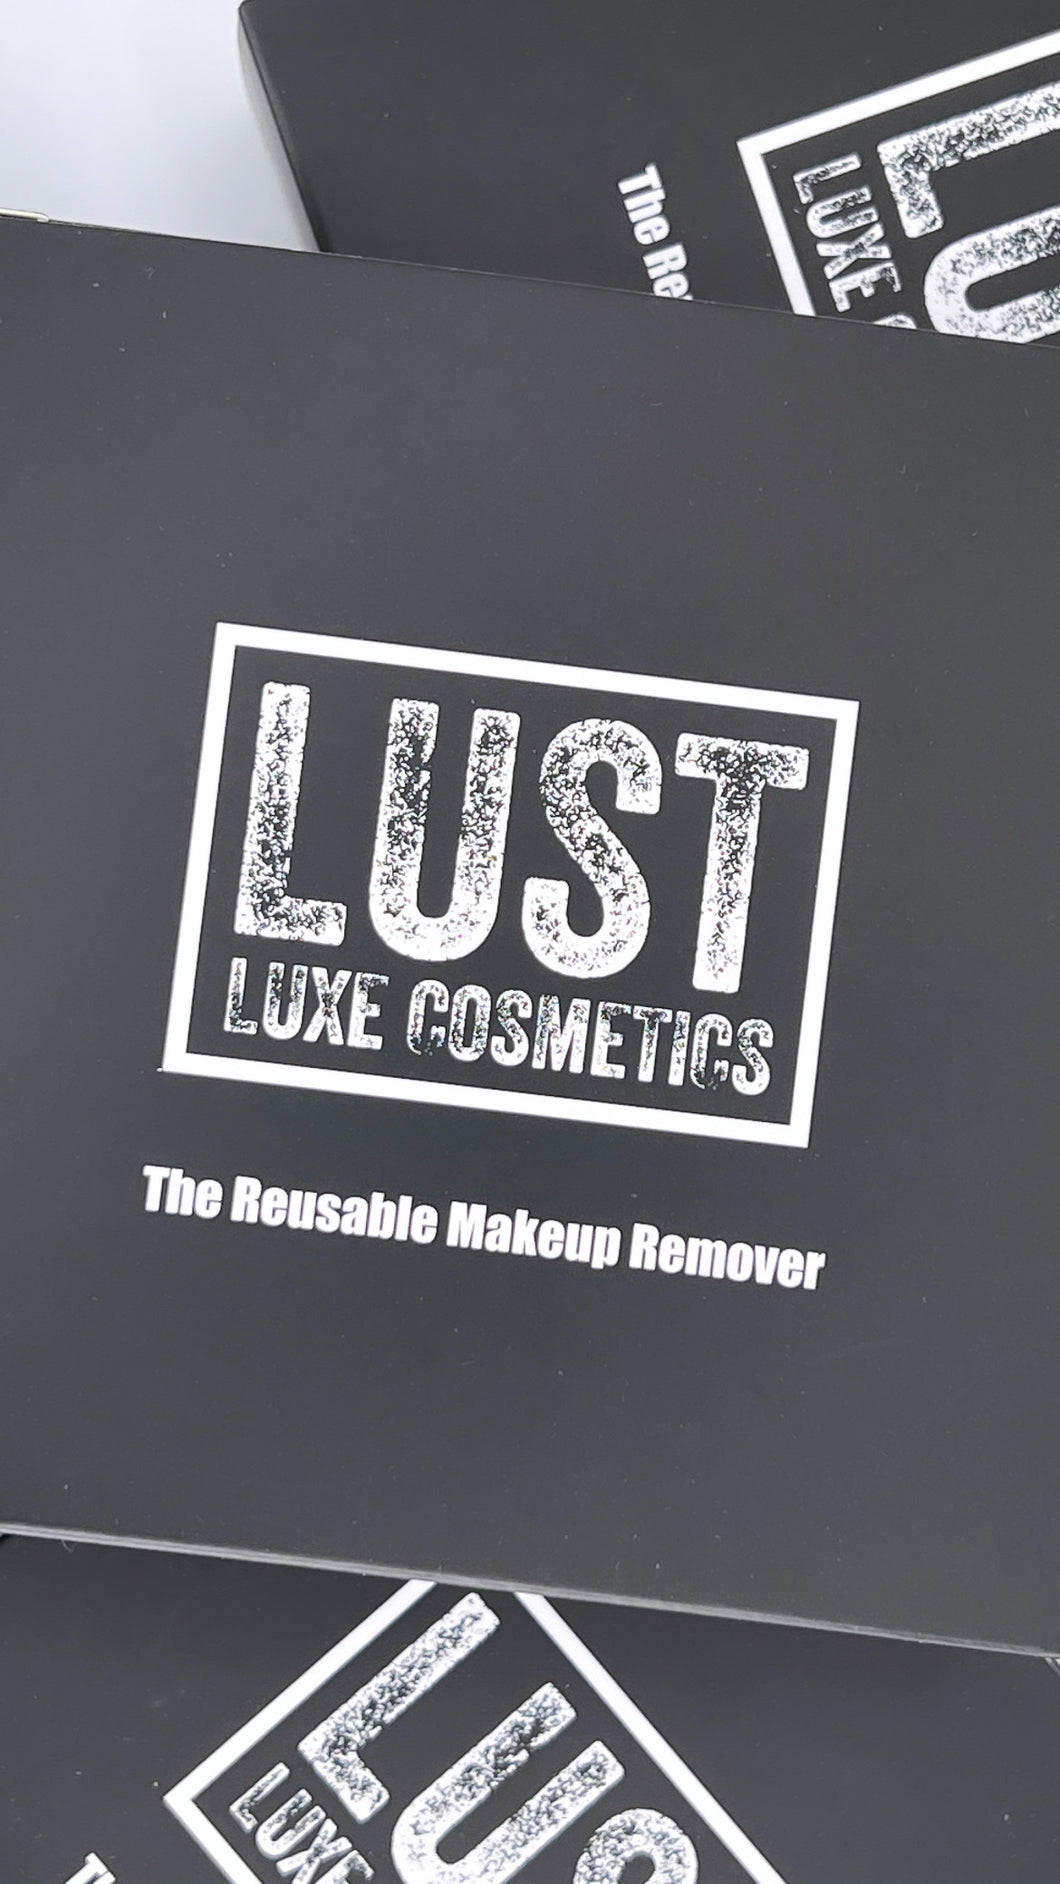 The Reusable Makeup Remover